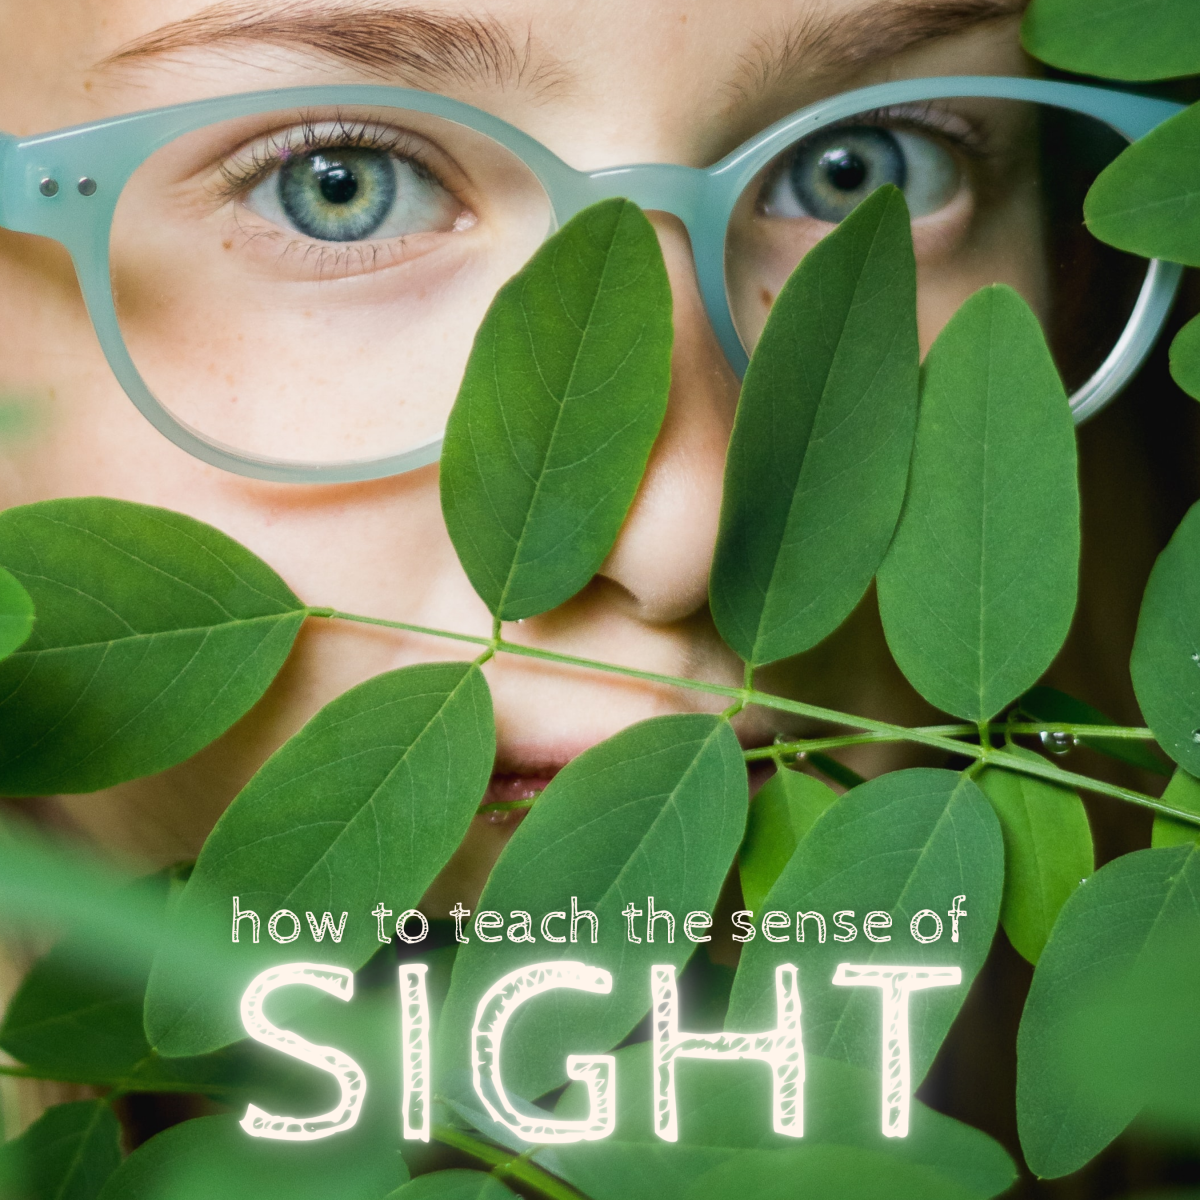 Teaching Kids in Preschool About the Sense of Sight